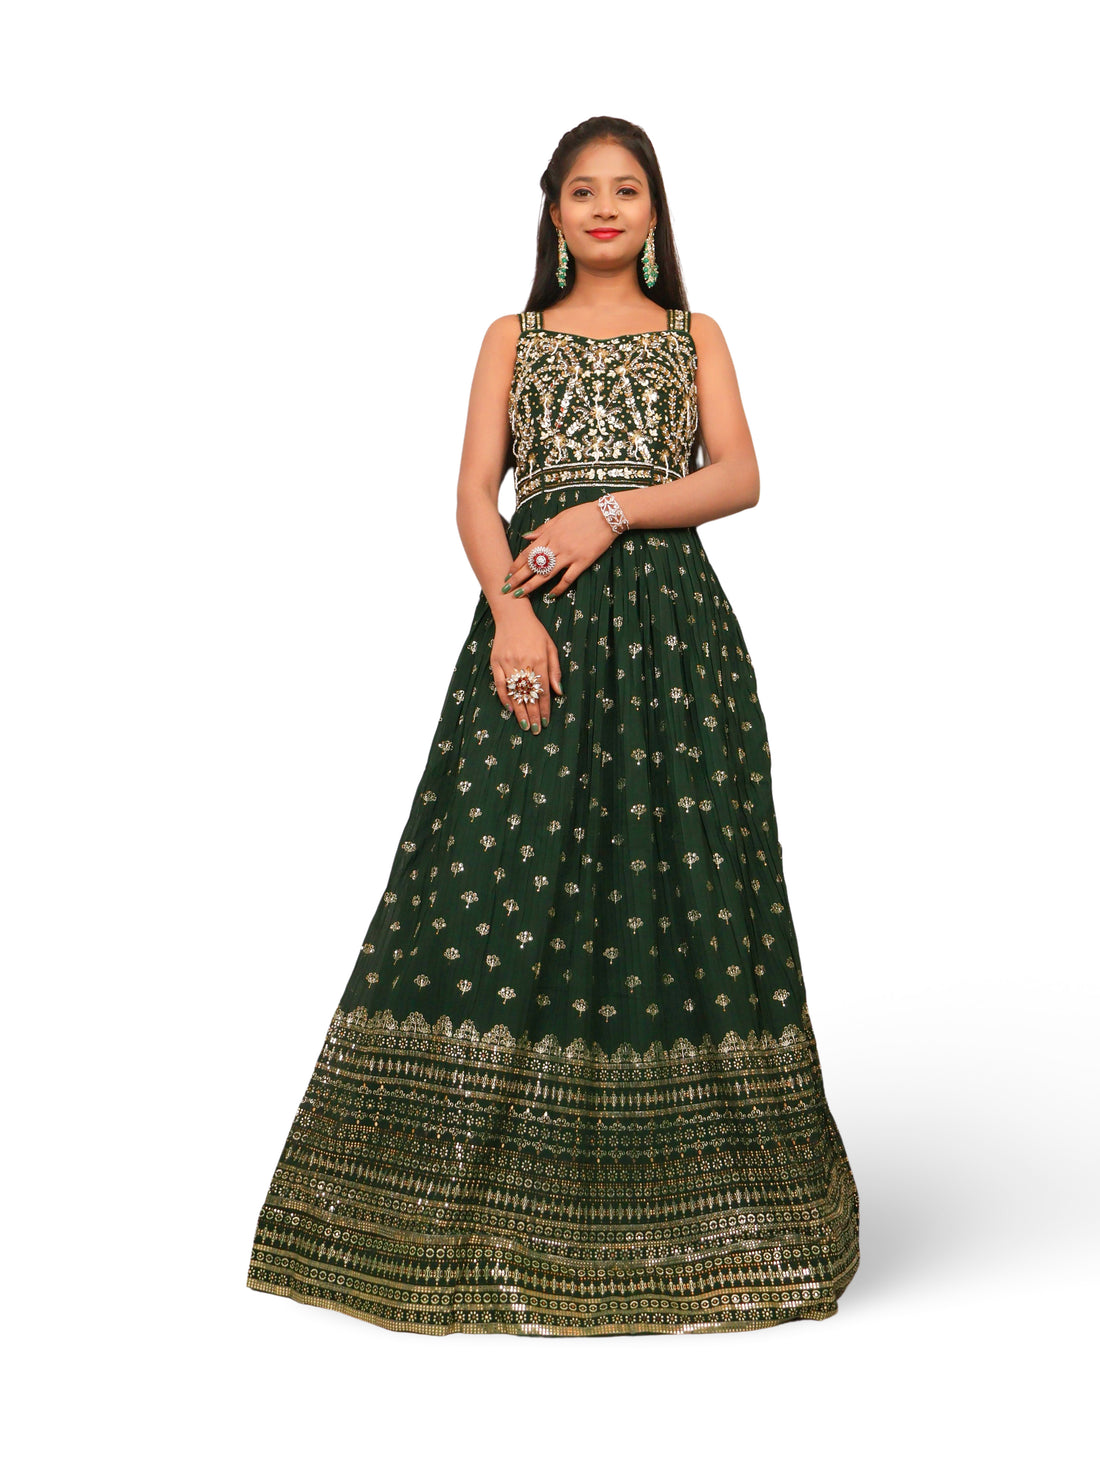 Dark Green Gown with Sequin &amp; Cut Dana Work by Shreekama Dark Green Designer Gowns for Party Festival Wedding Occasion in Noida